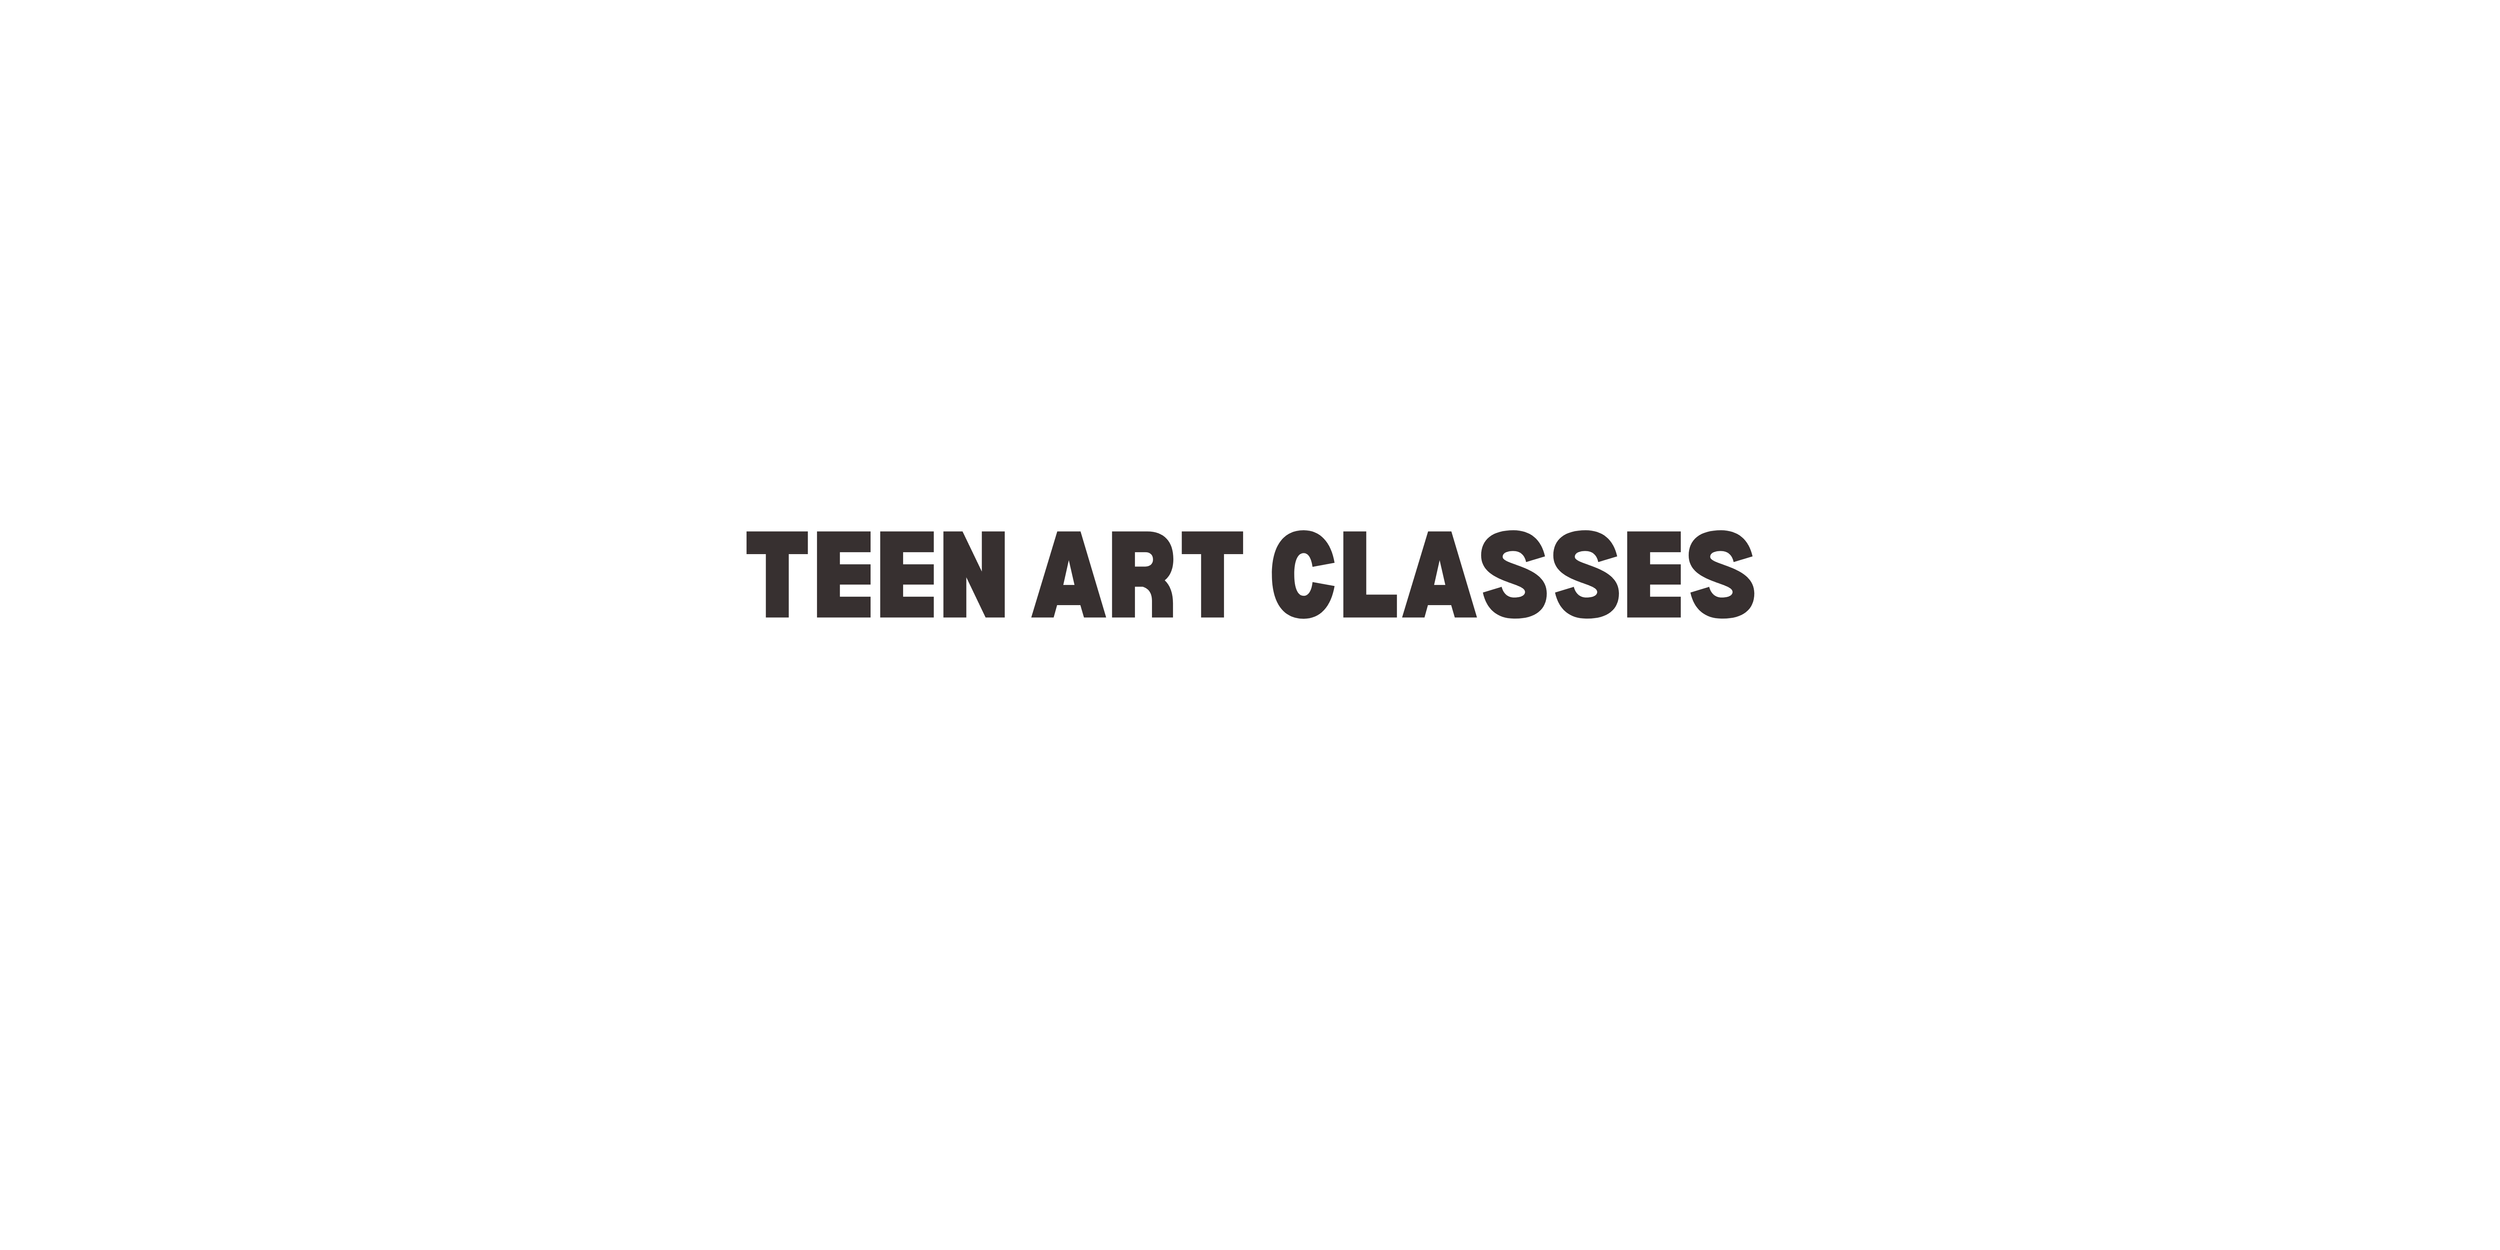 Studio Art for Teens - Online Art Classes for High School Students